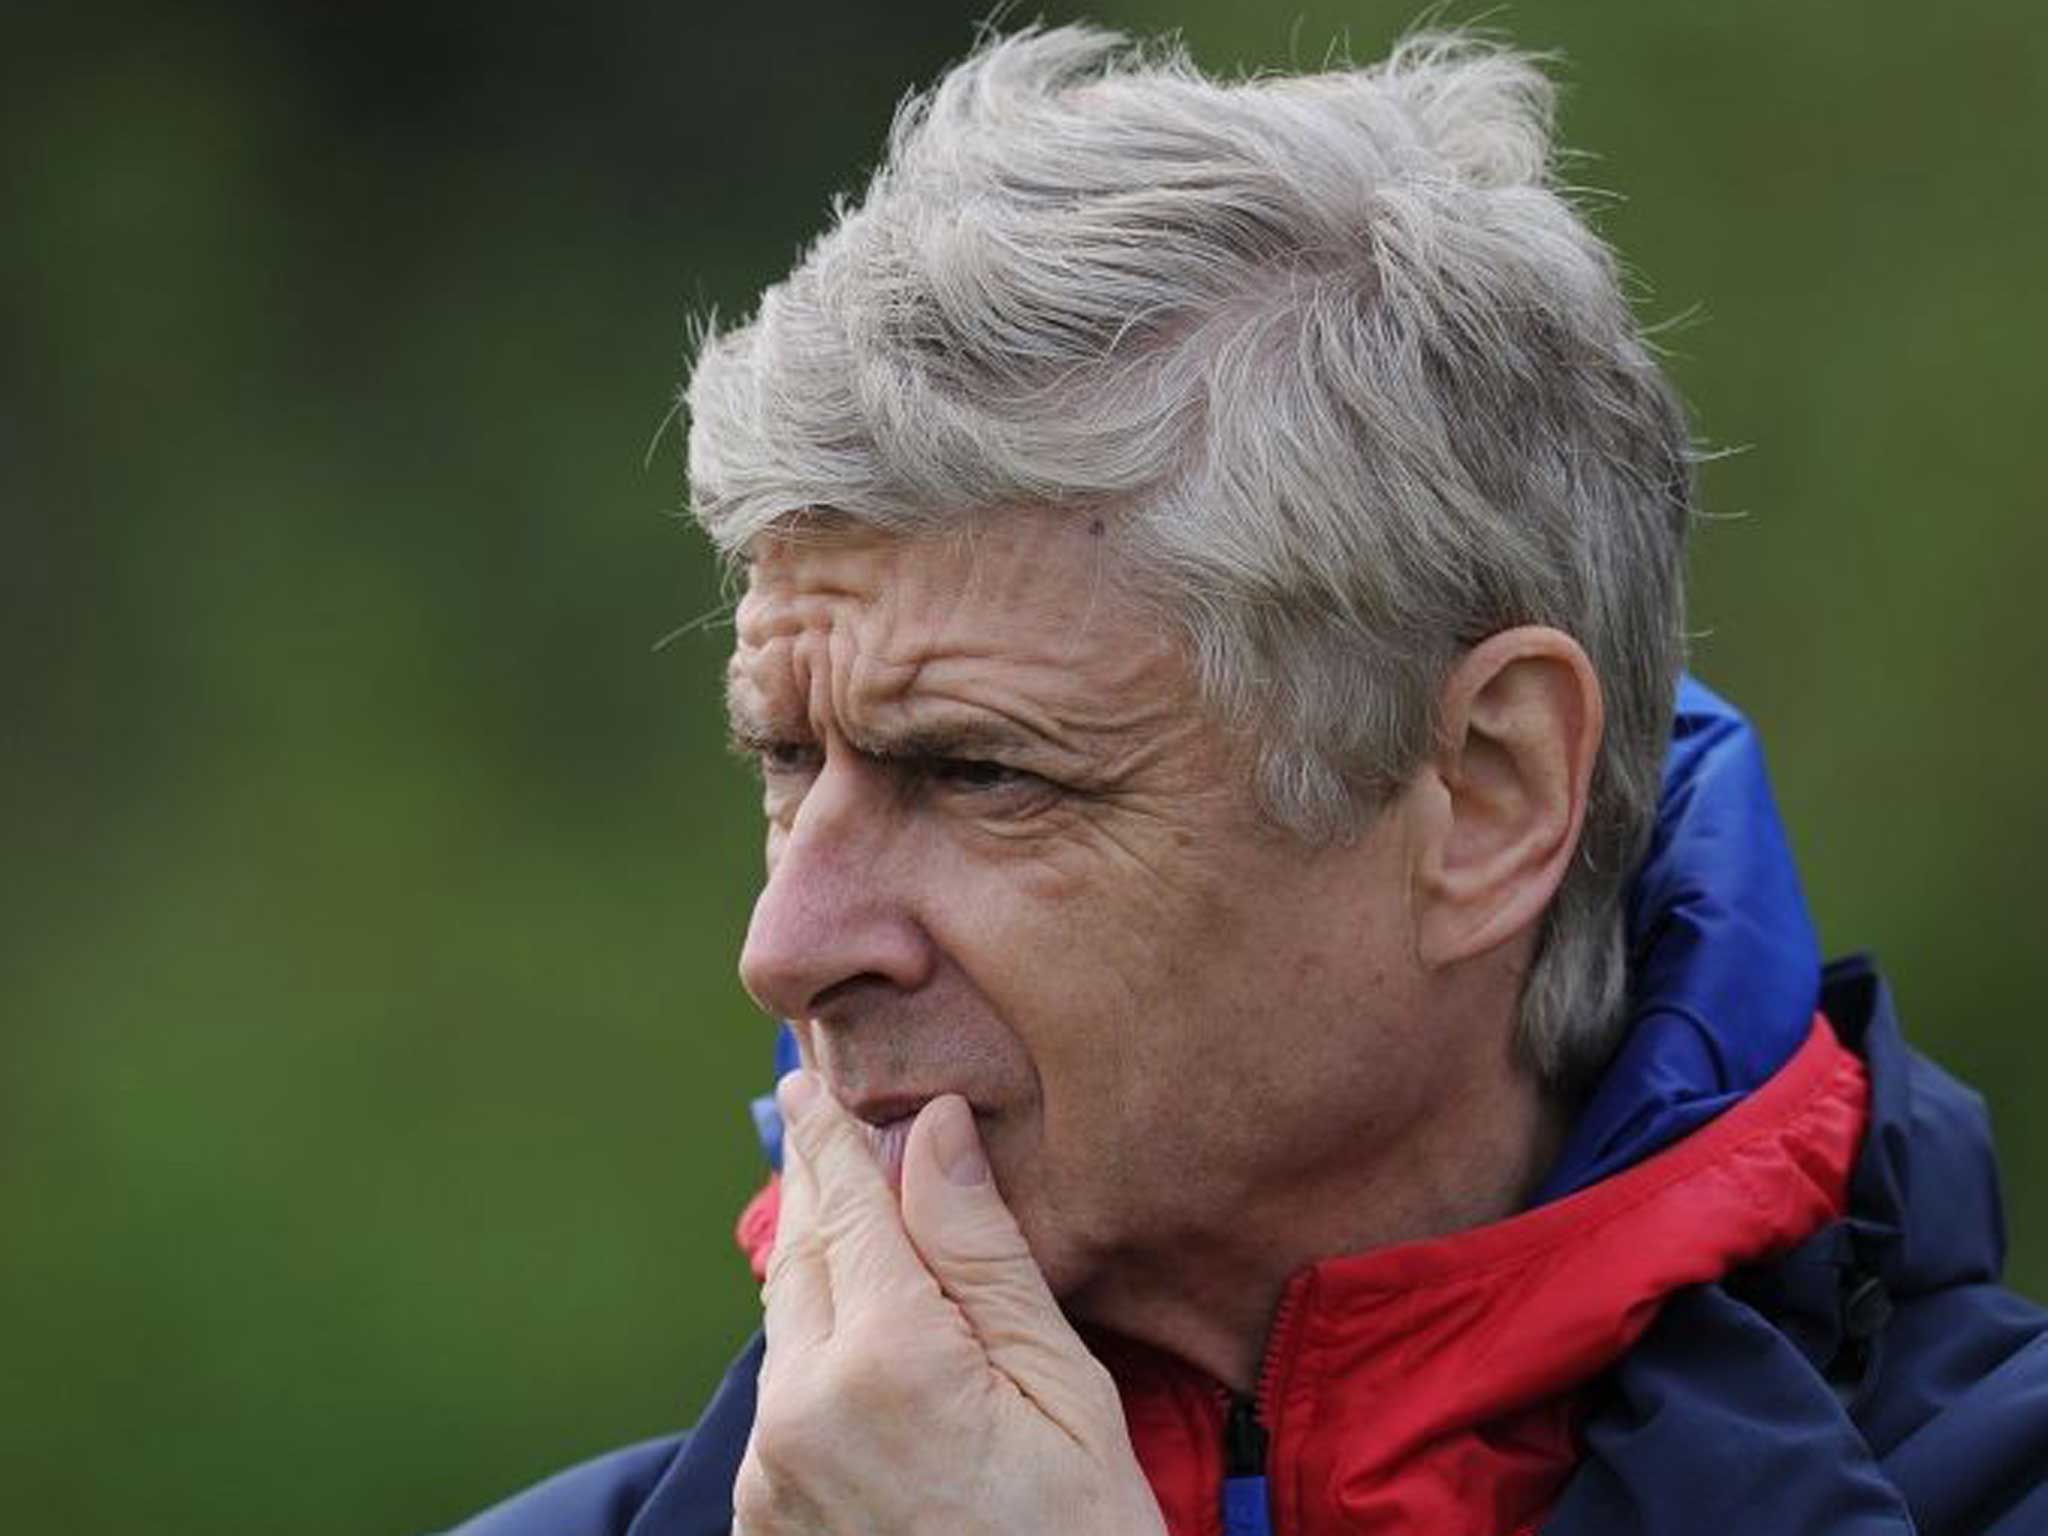 Arsene Wenger looks on during Arsenal training